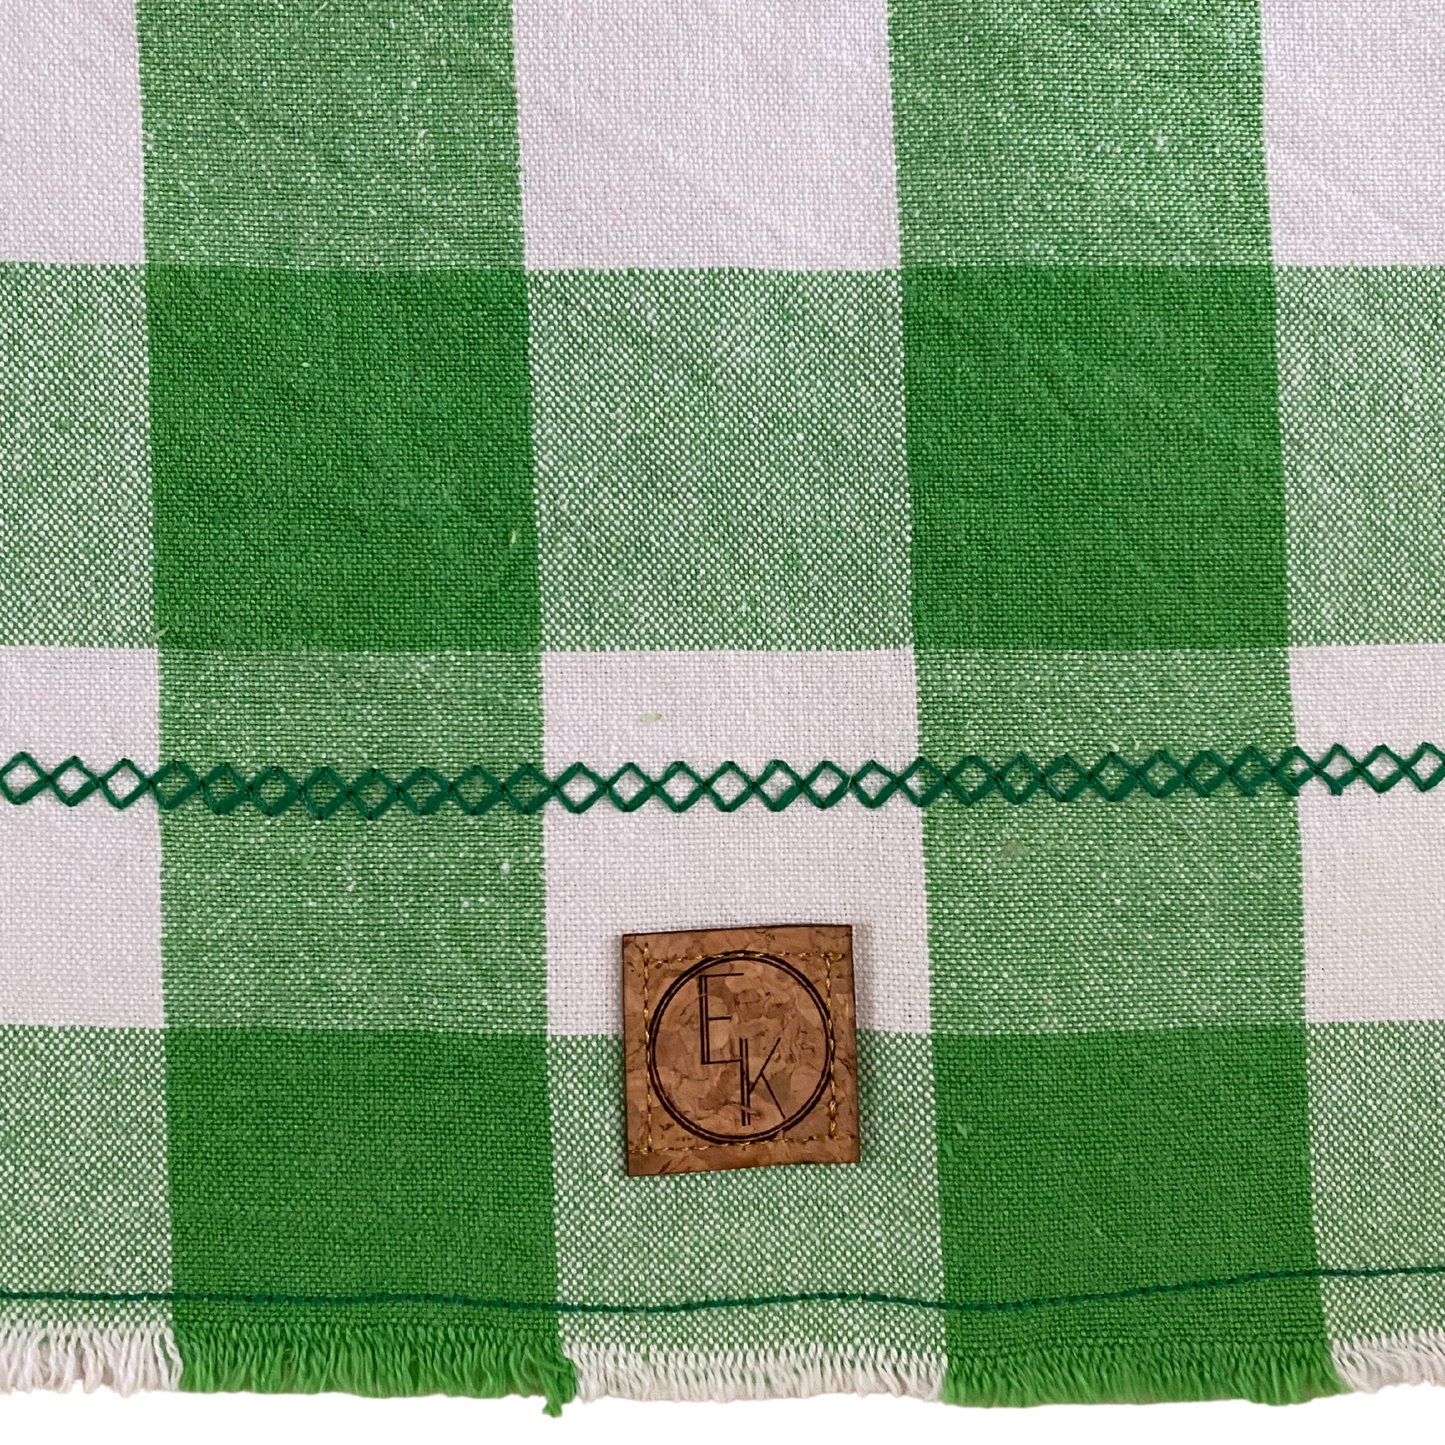 Green Plaid with Green Tea Towel